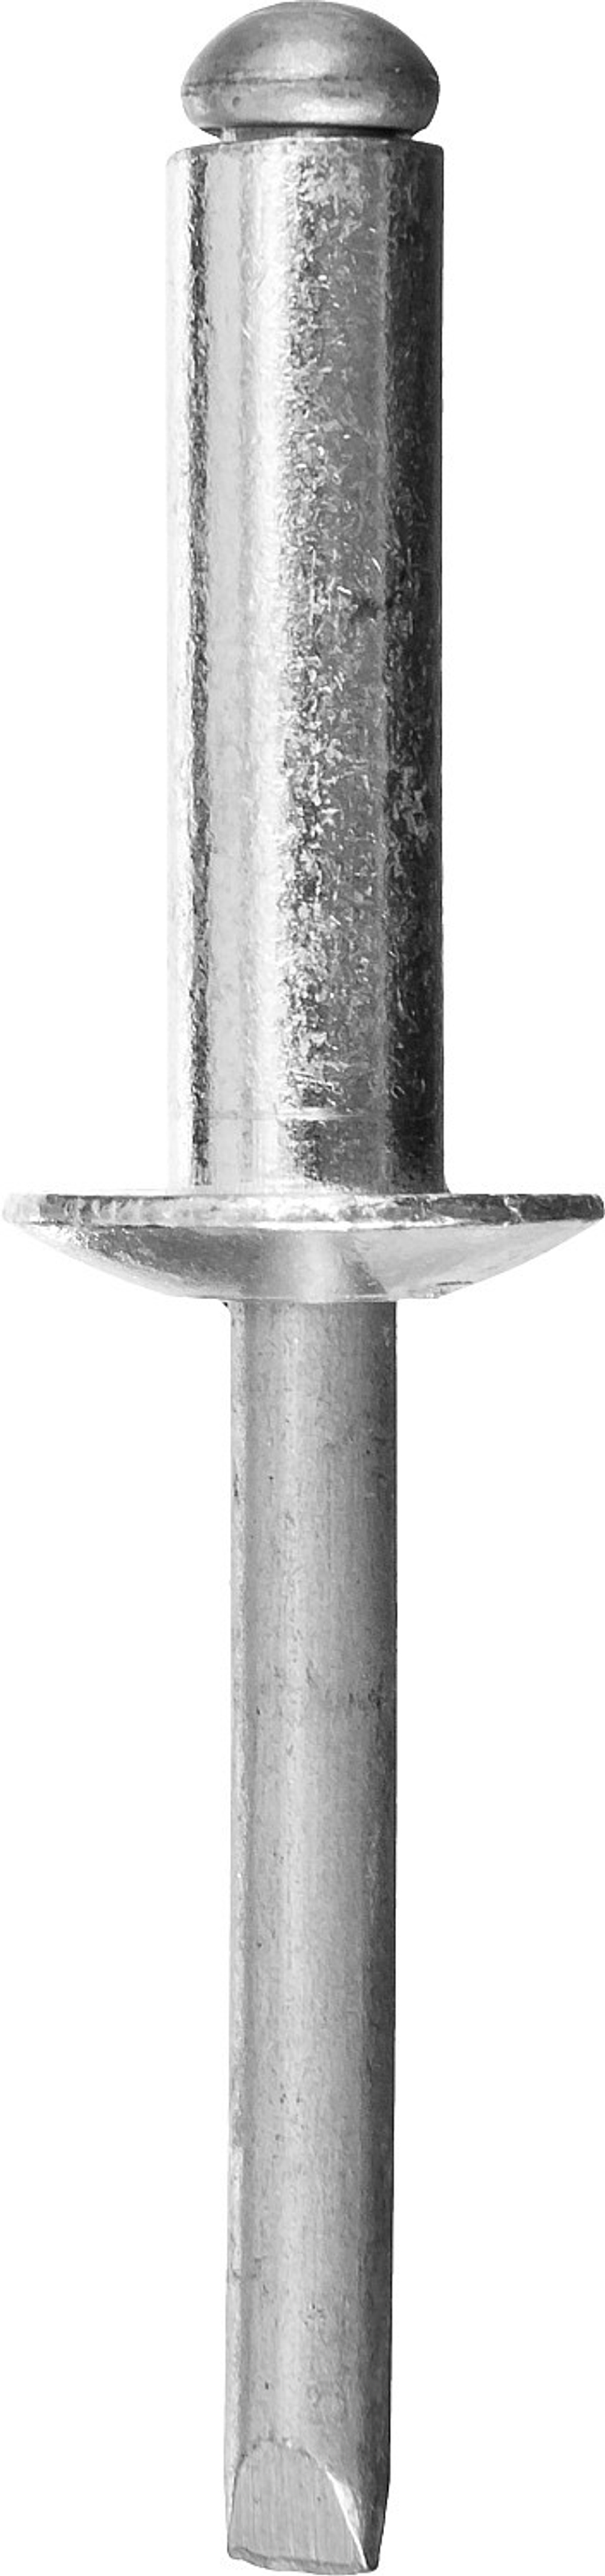 Алюминиевые заклепки Pro-FIX, 4.8 х 20 мм, 50 шт, STAYER Professional